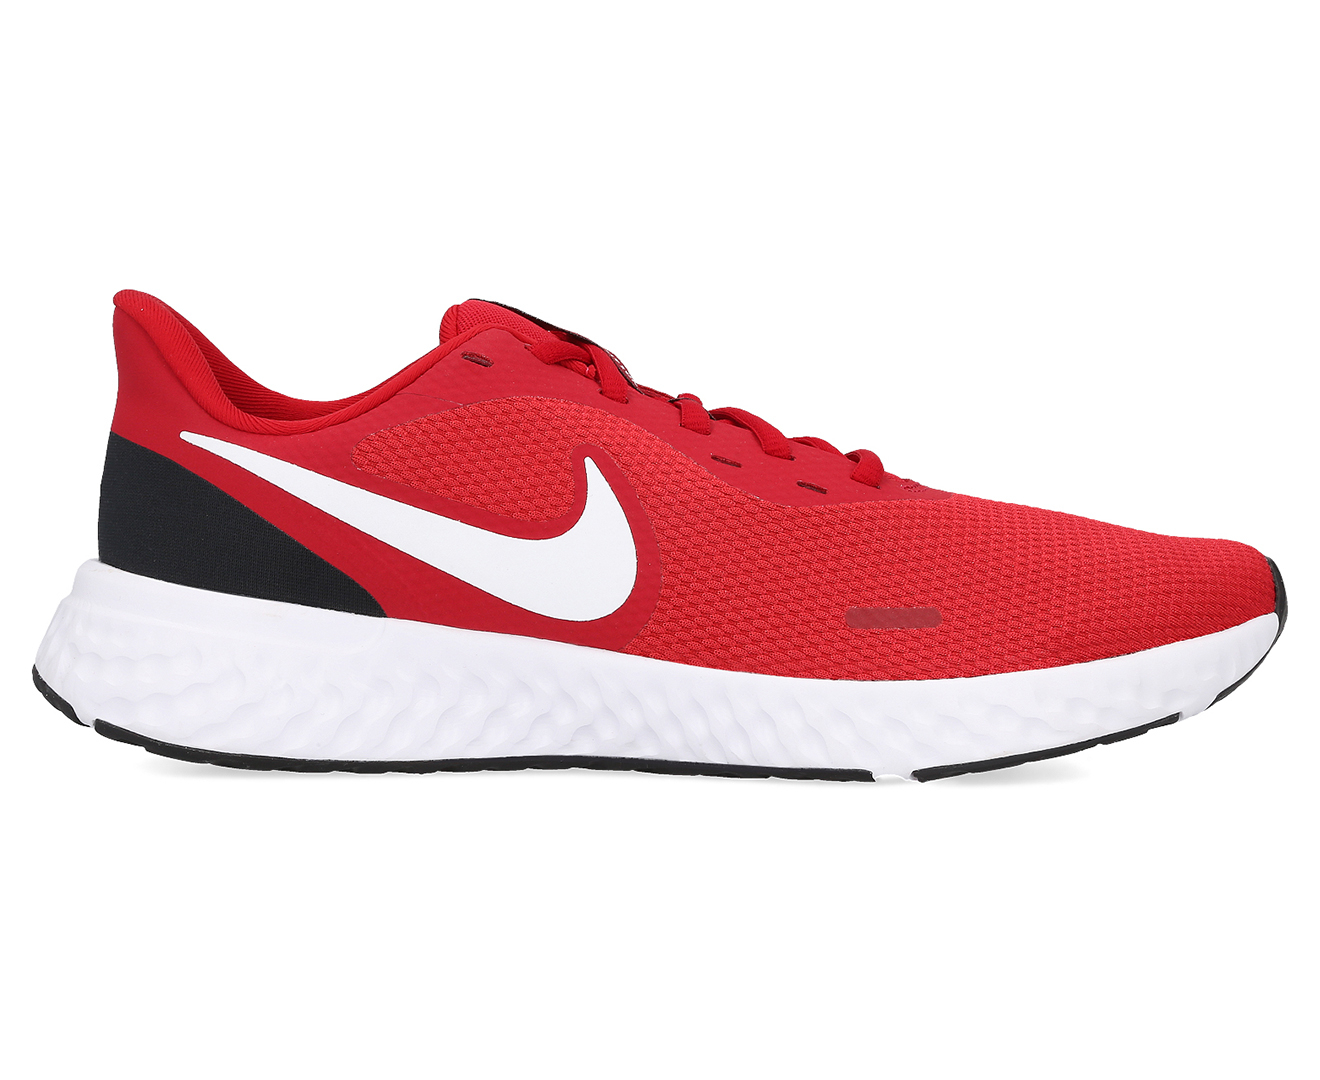 Nike Men's Revolution 5 Running Shoes - Gym Red/White-Black | Www.catch ...